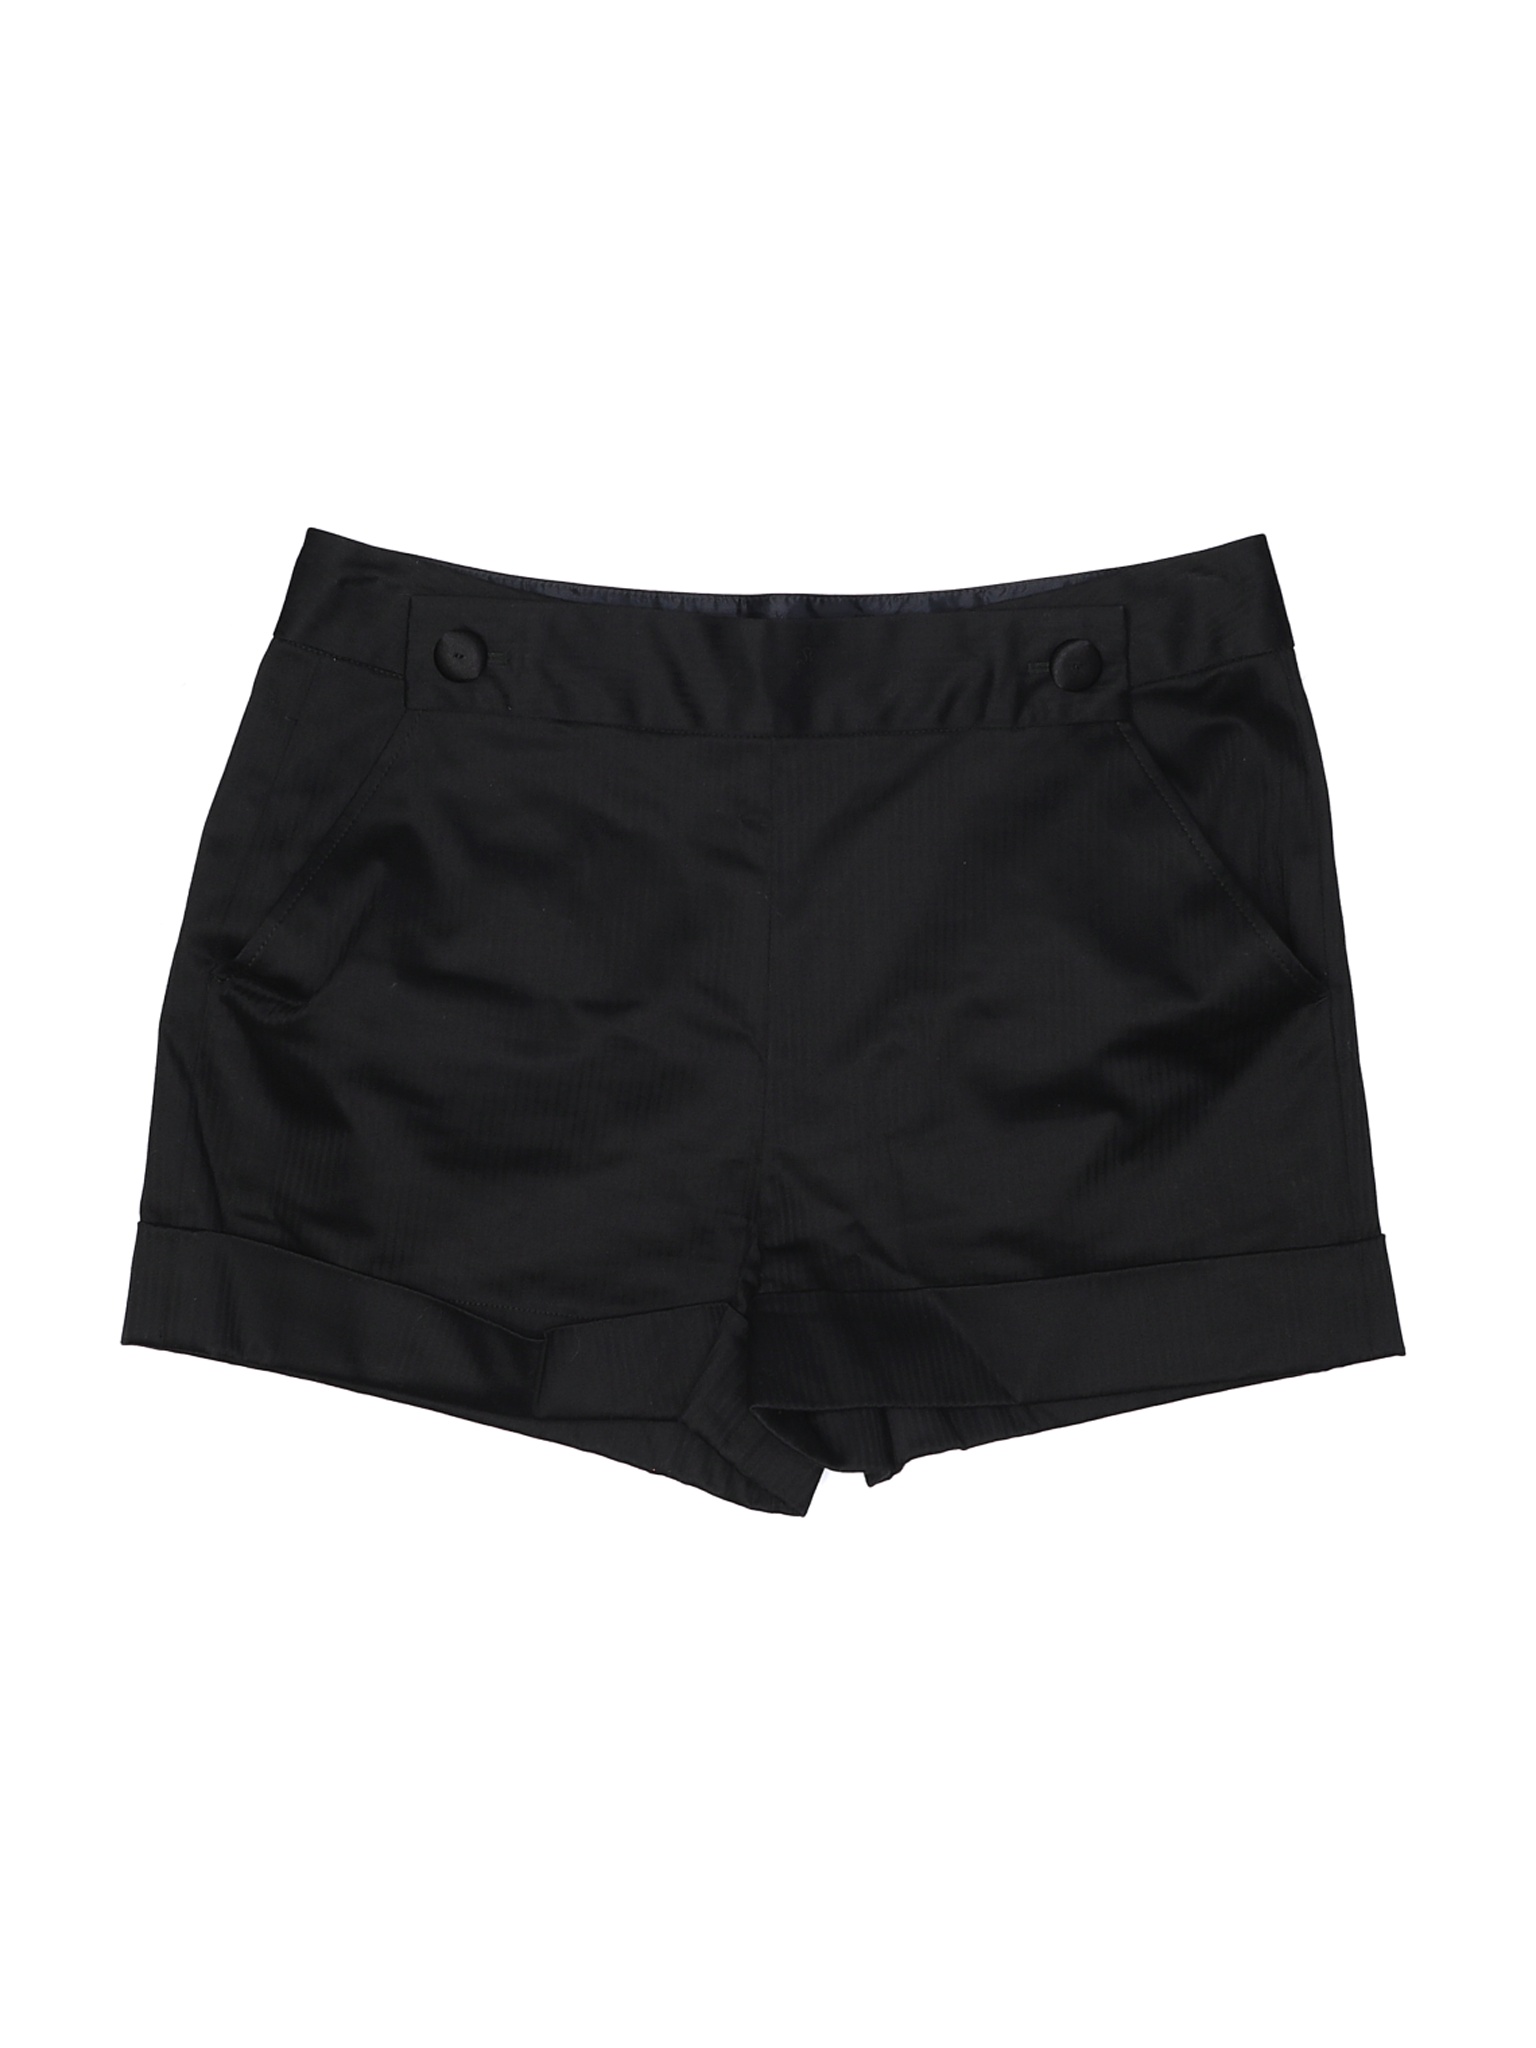 Marc by Marc Jacobs Women Black Shorts 12 | eBay